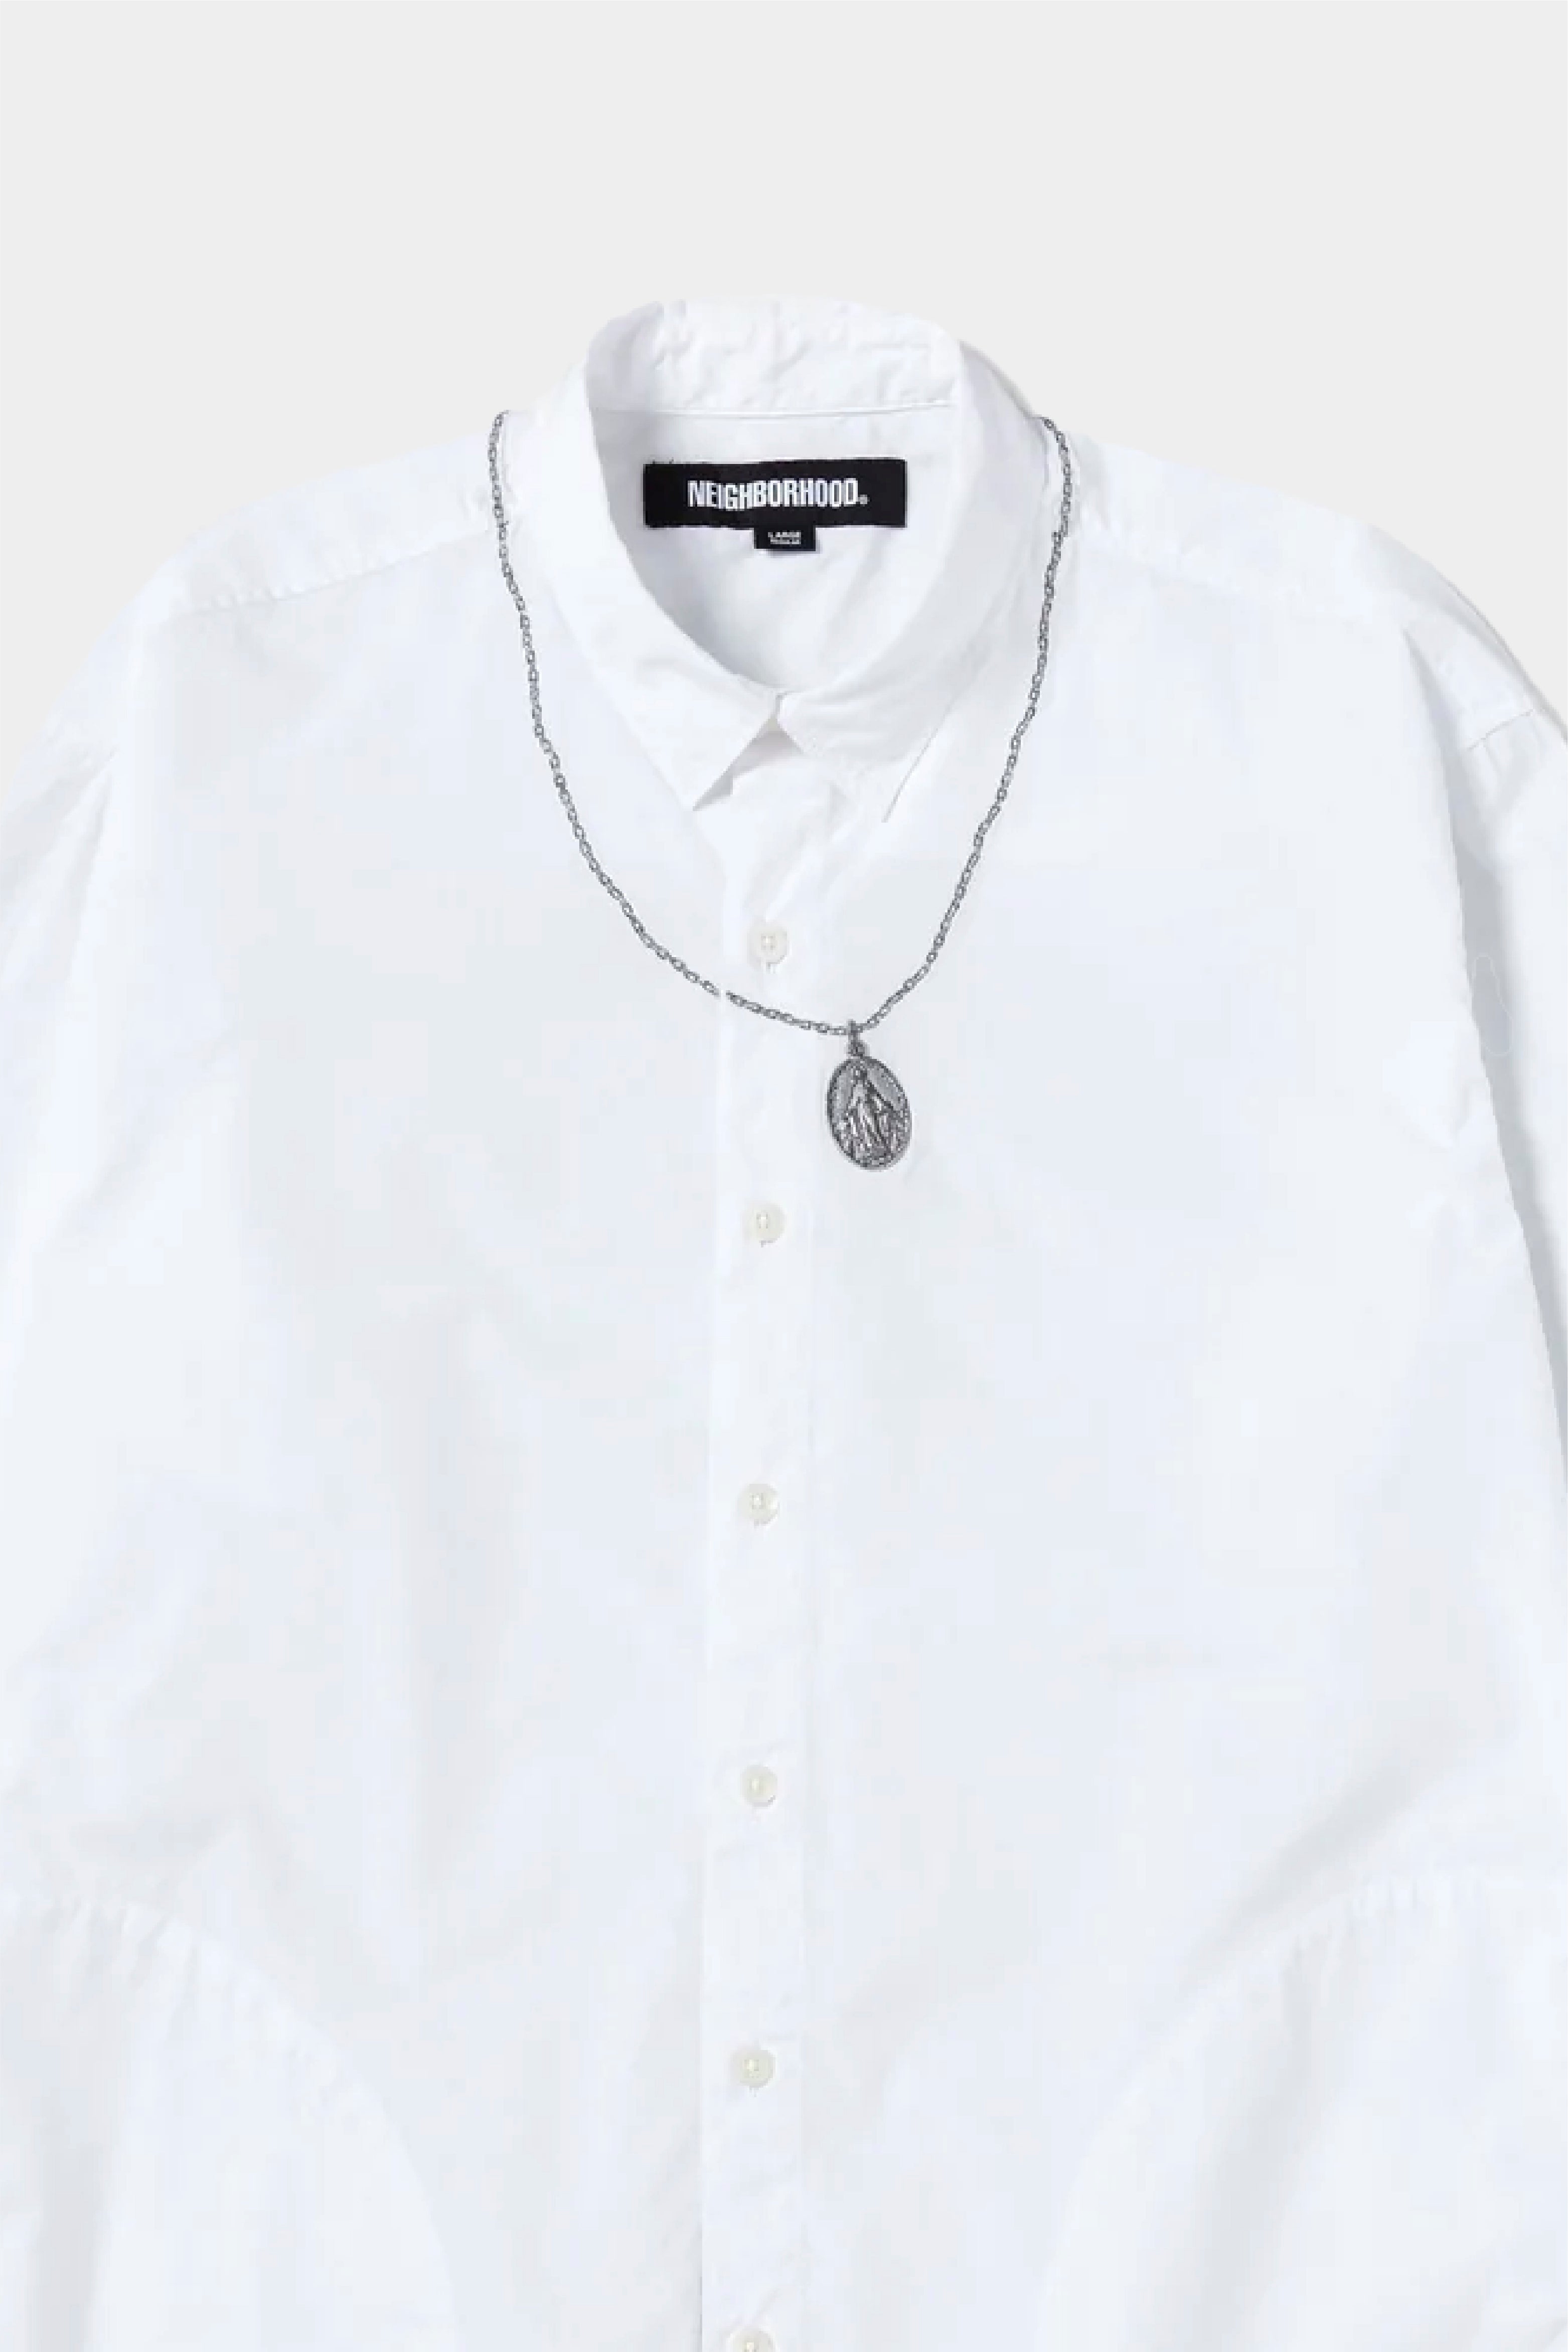 Selectshop FRAME - NEIGHBORHOOD Medal Shirt LS Shirts Dubai